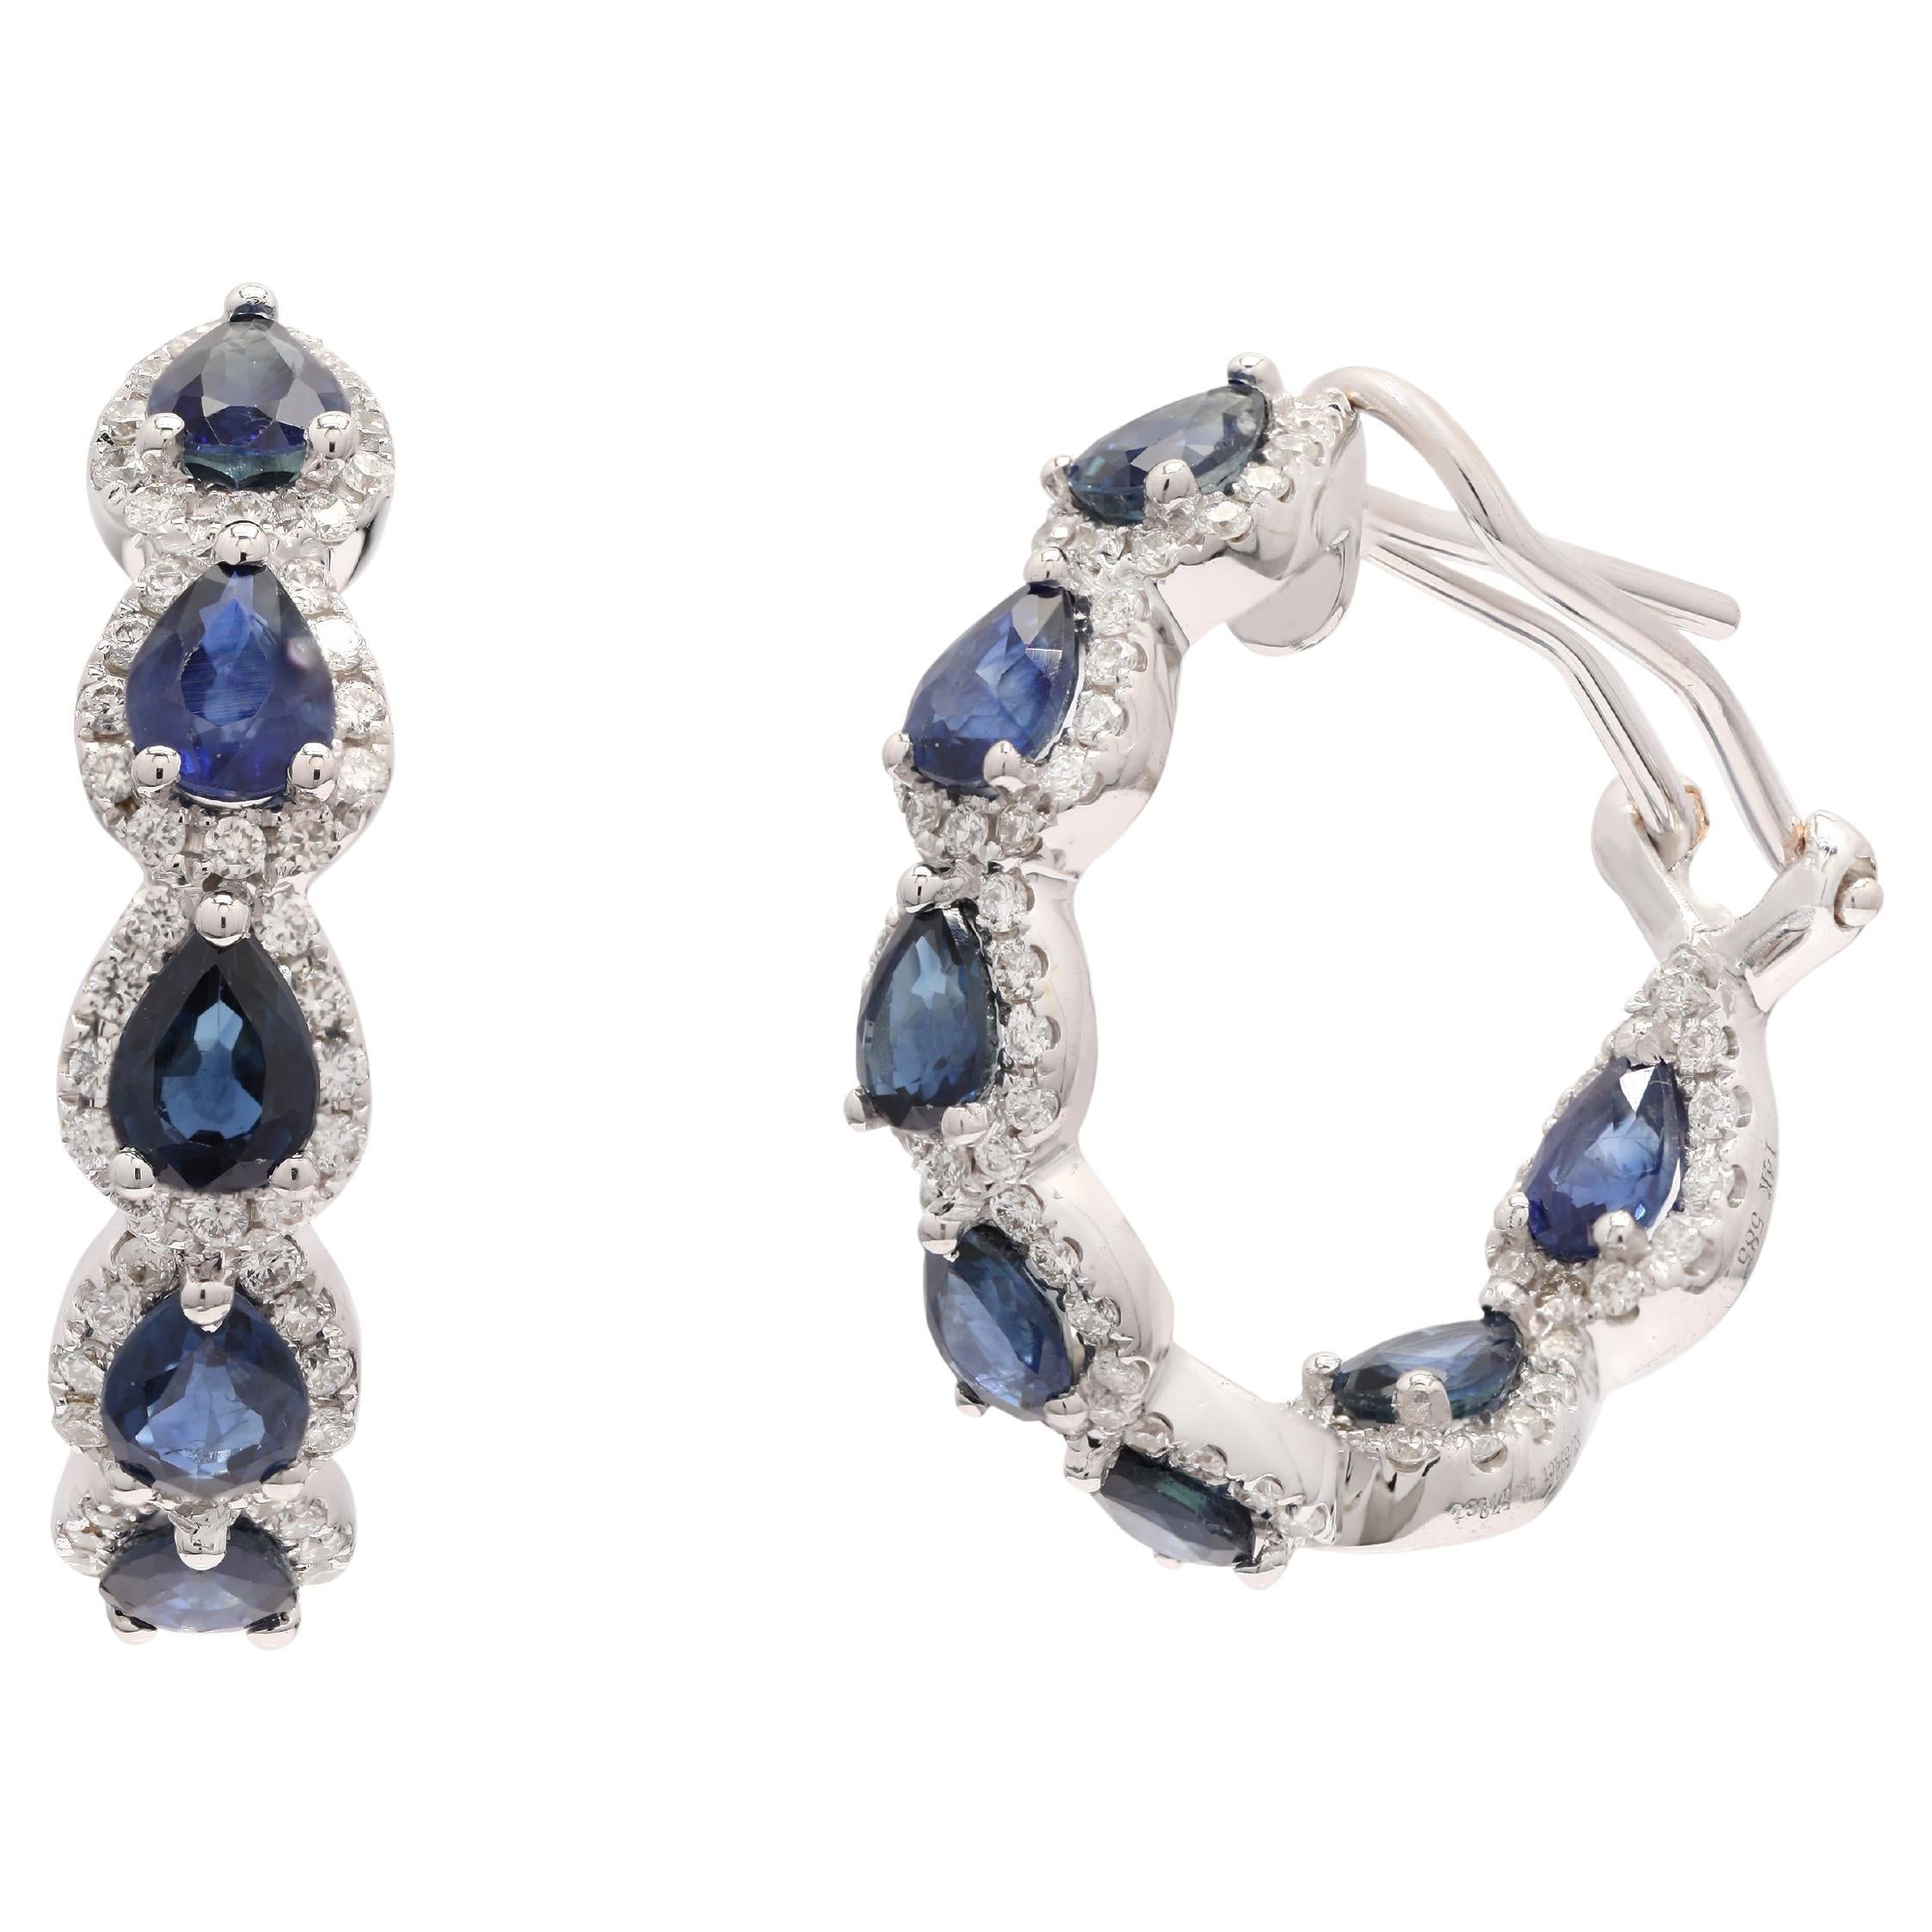 2.59 Carat Pear Cut Blue Sapphire and Diamond Hoop Earrings in 14K White Gold 